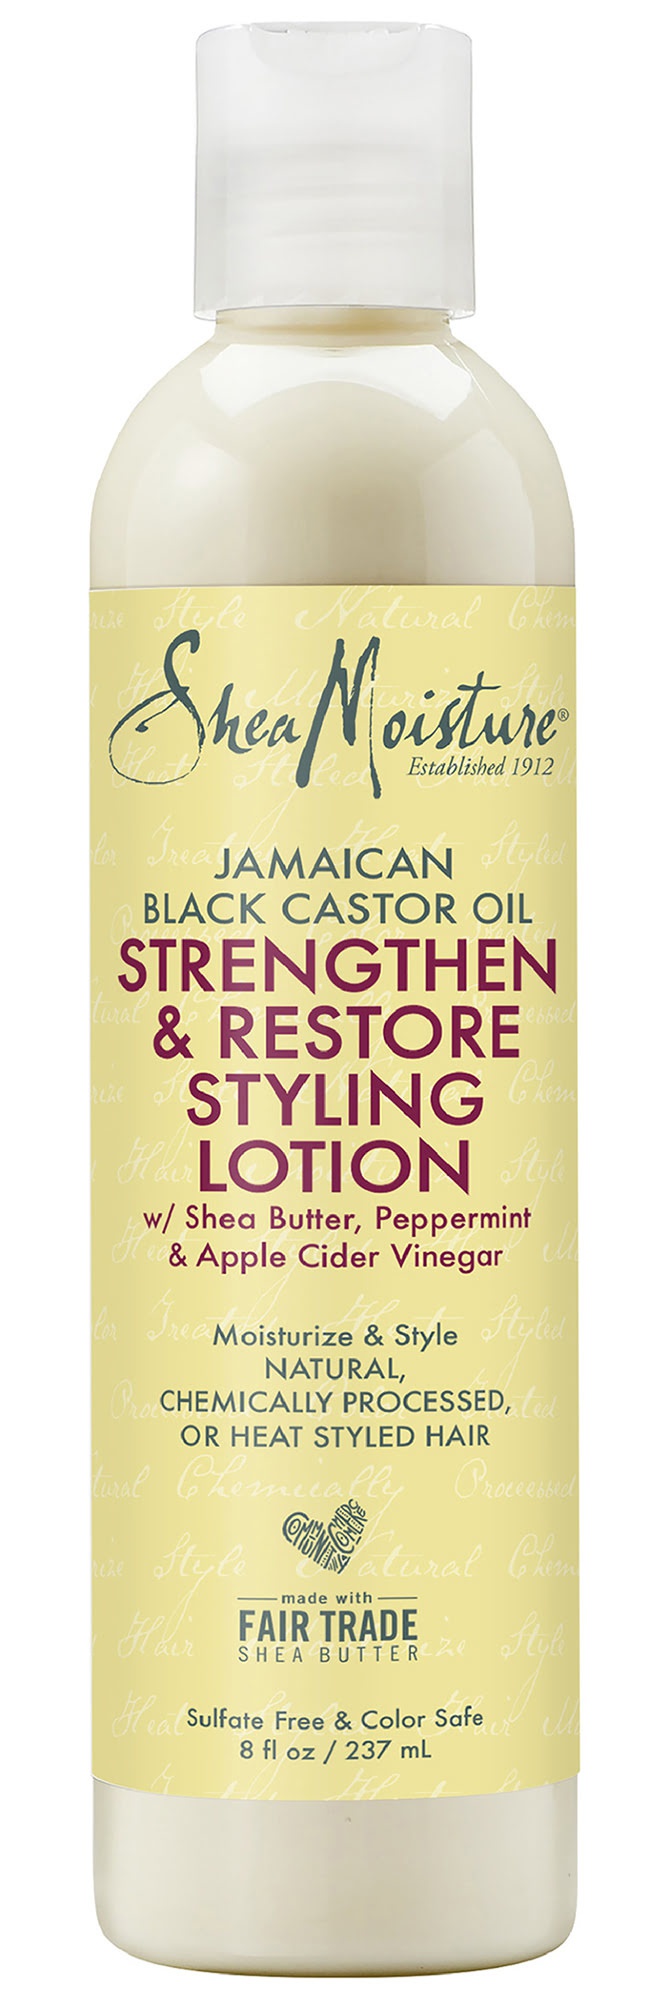 Shea Moisture Jamaican Black Castor Oil Styling Lotion